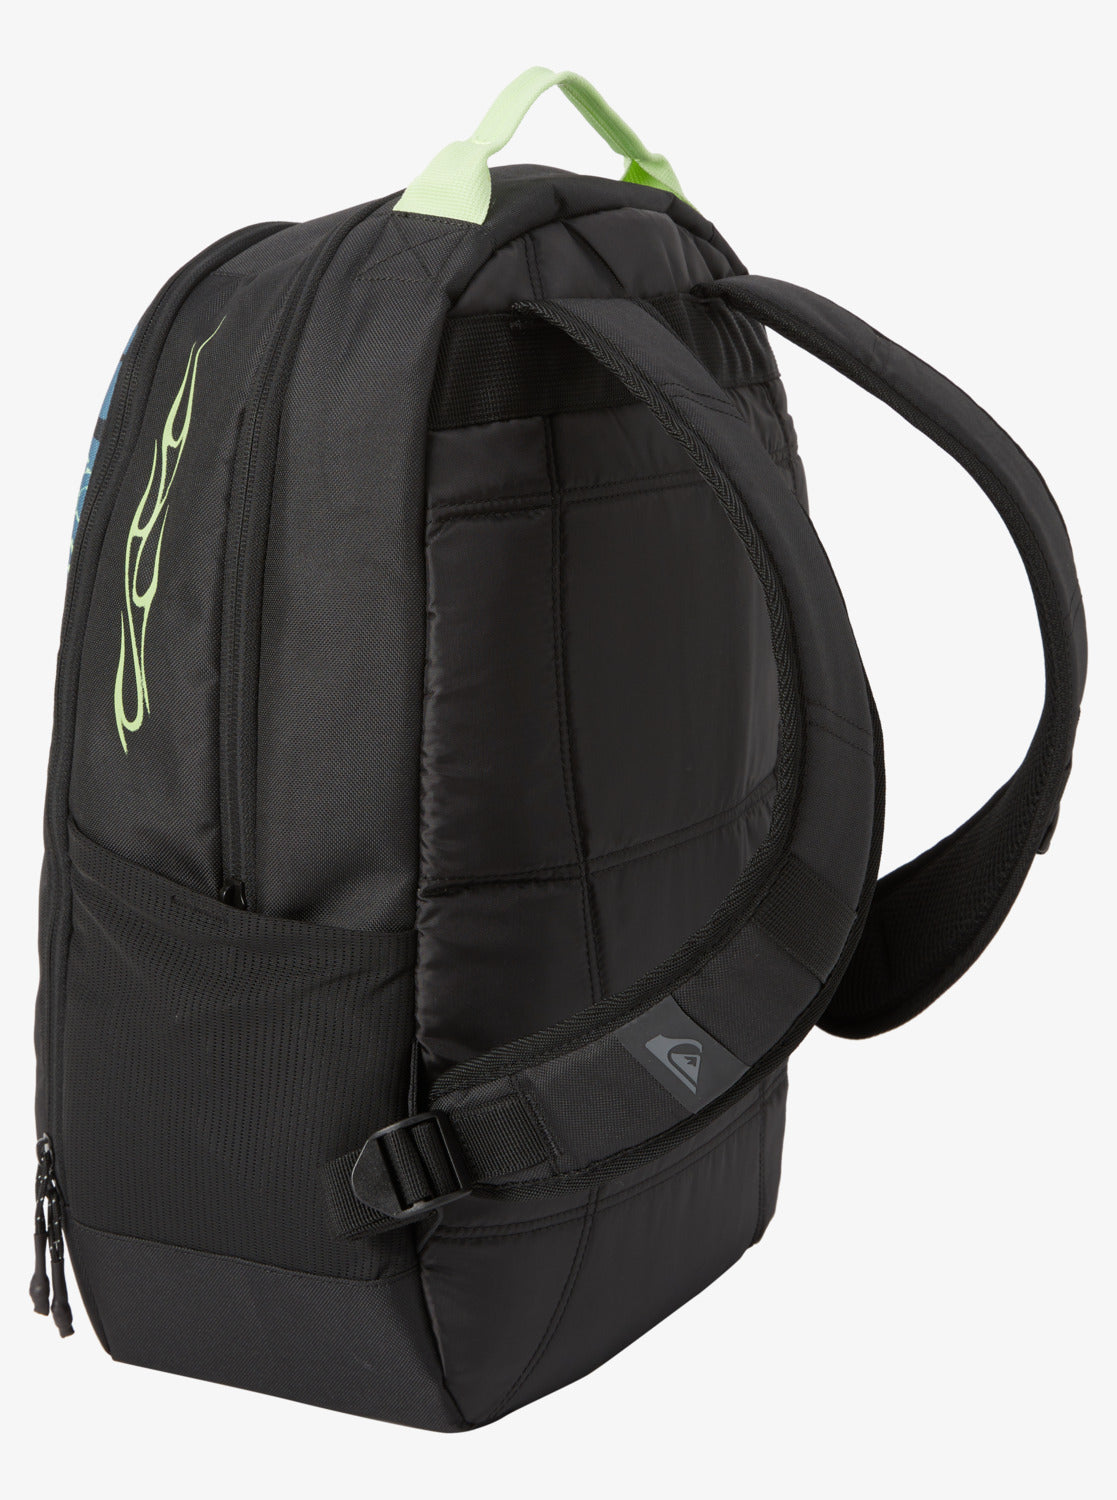 Quiksilver Schoolie 2.0 Backpack showing rear